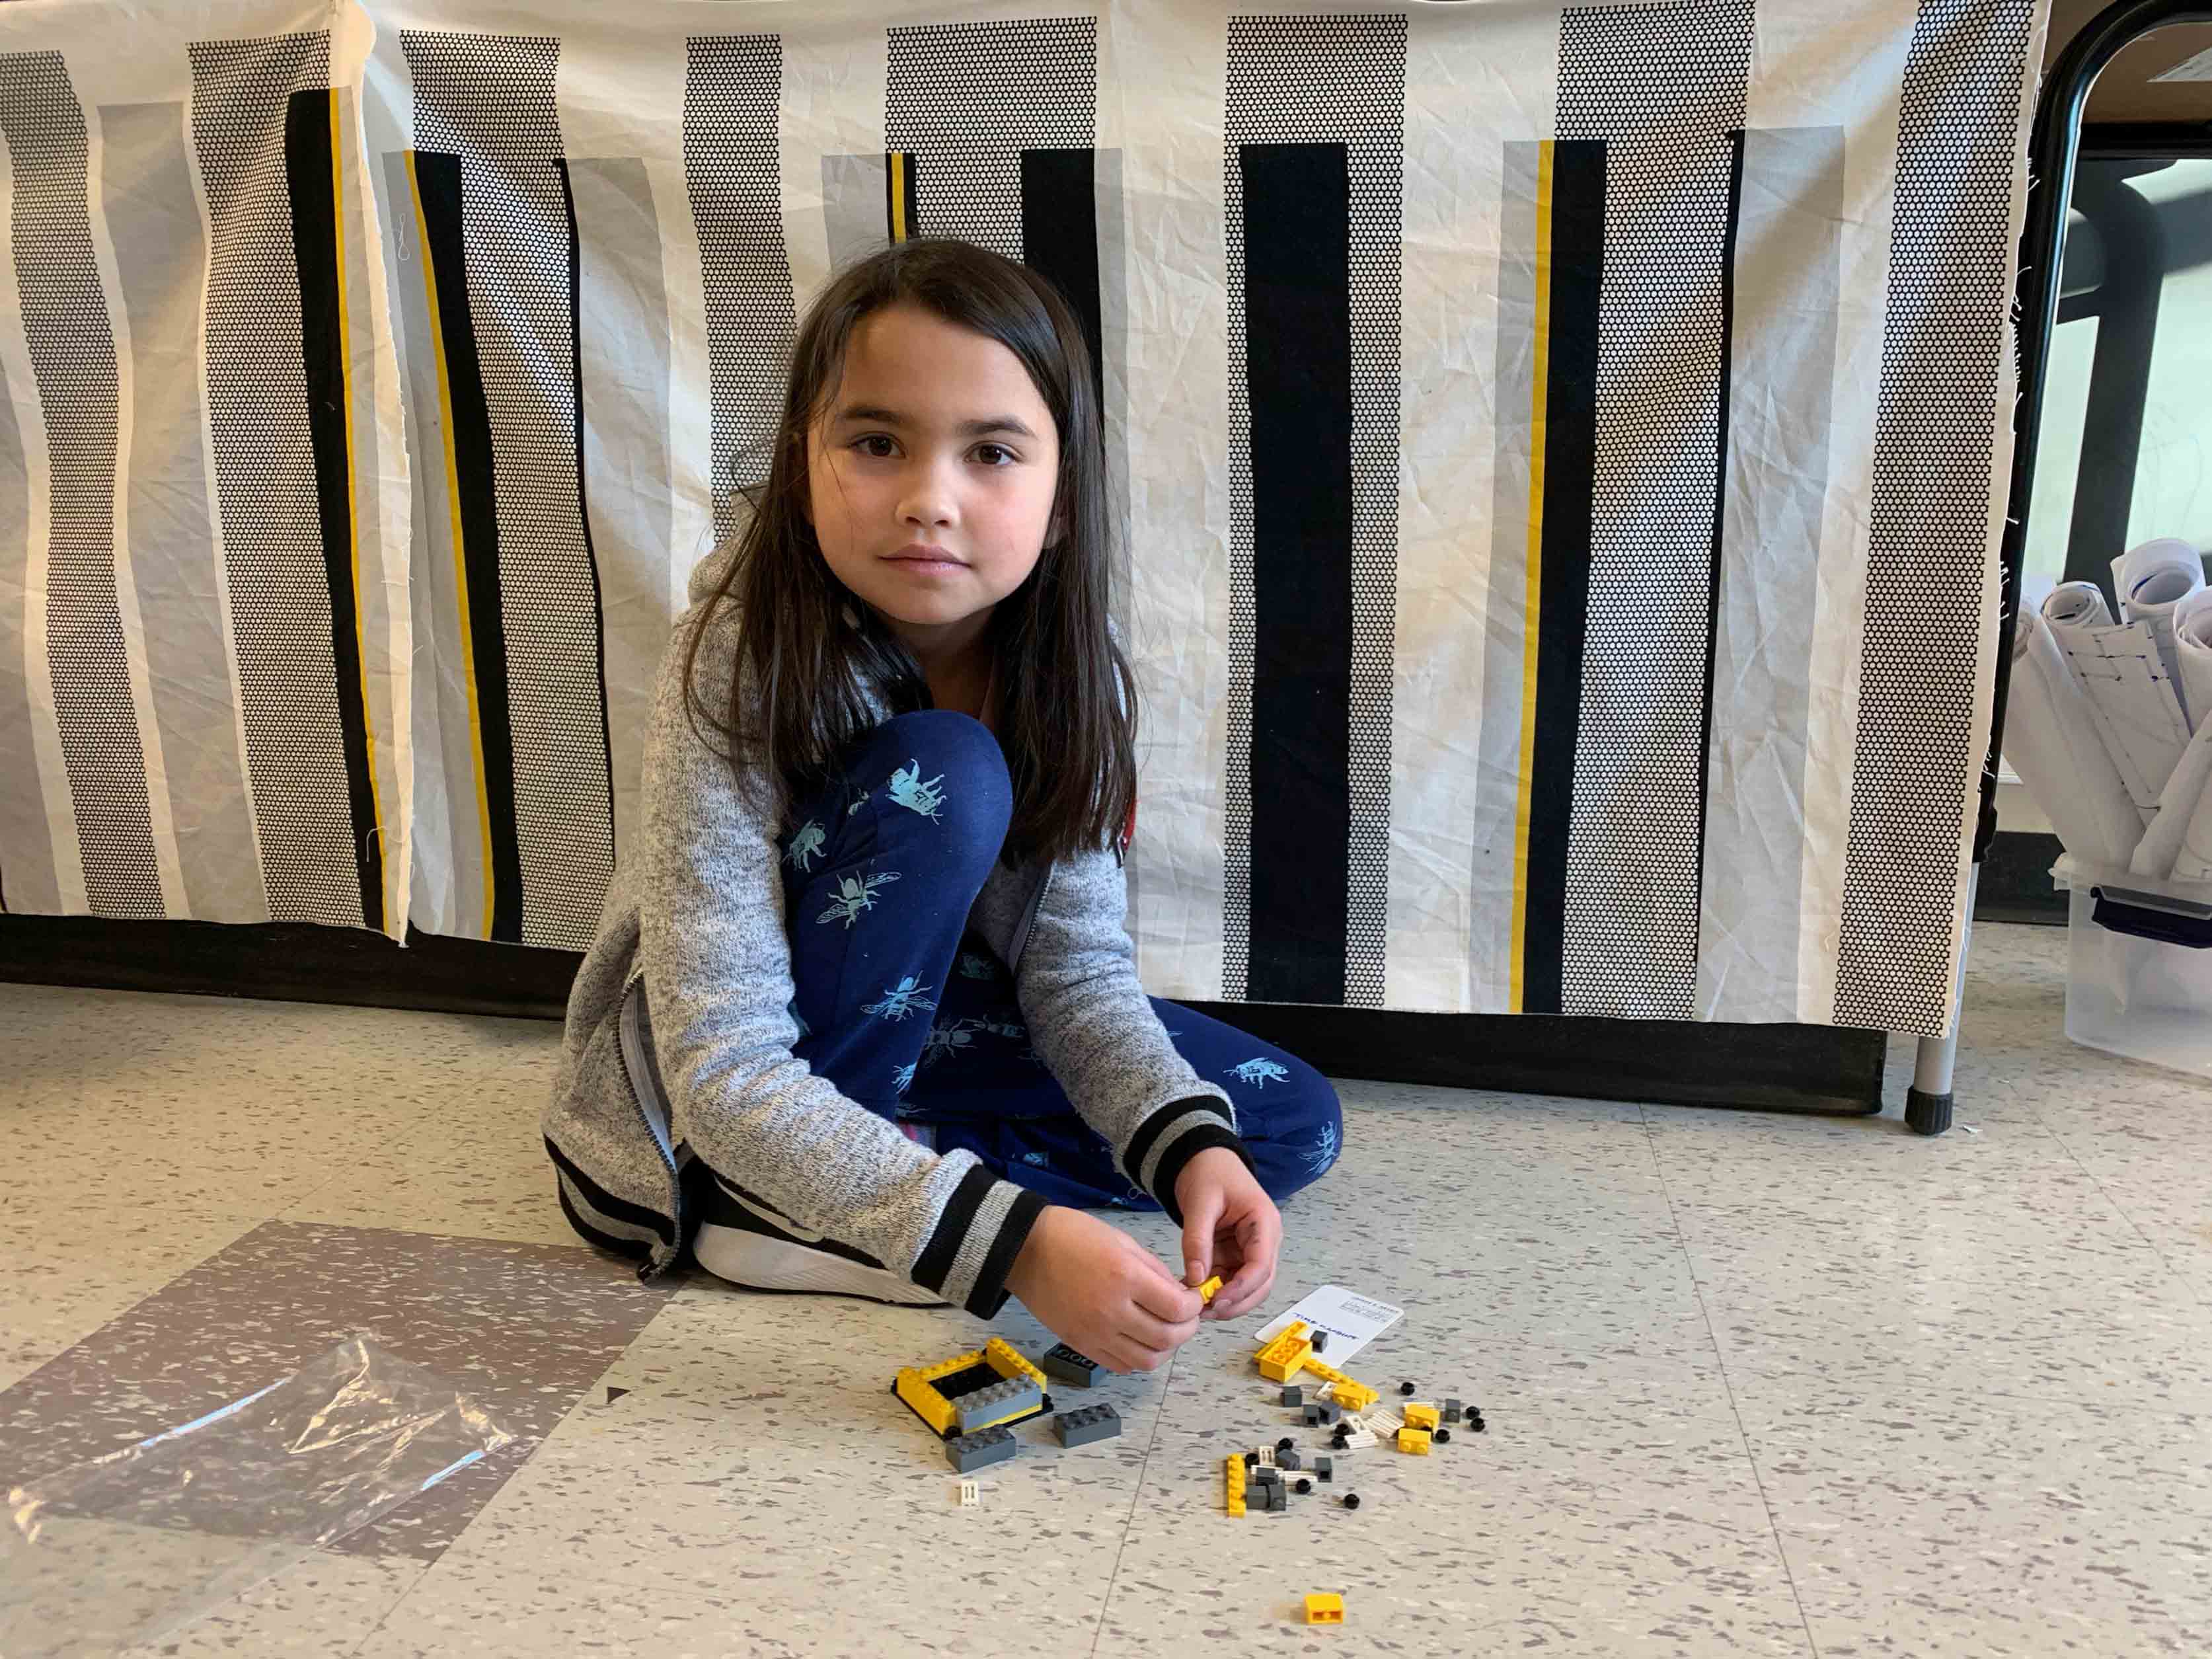 Kiera getting started on her LEGO challenge.